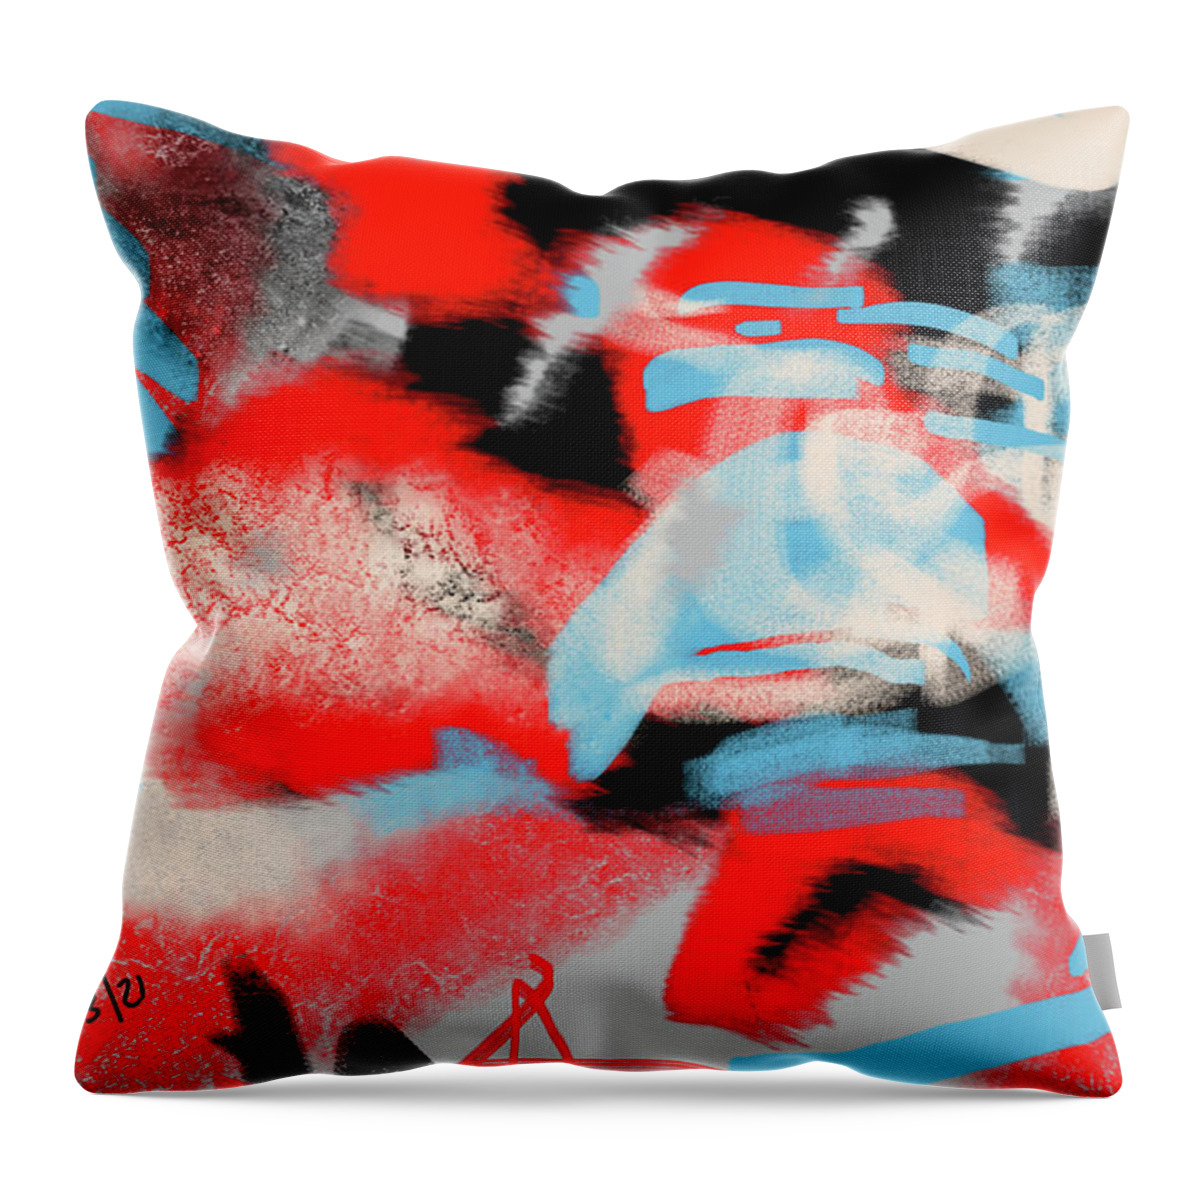 Joe Ogle Throw Pillow featuring the digital art Abstract 1 by Joseph Ogle